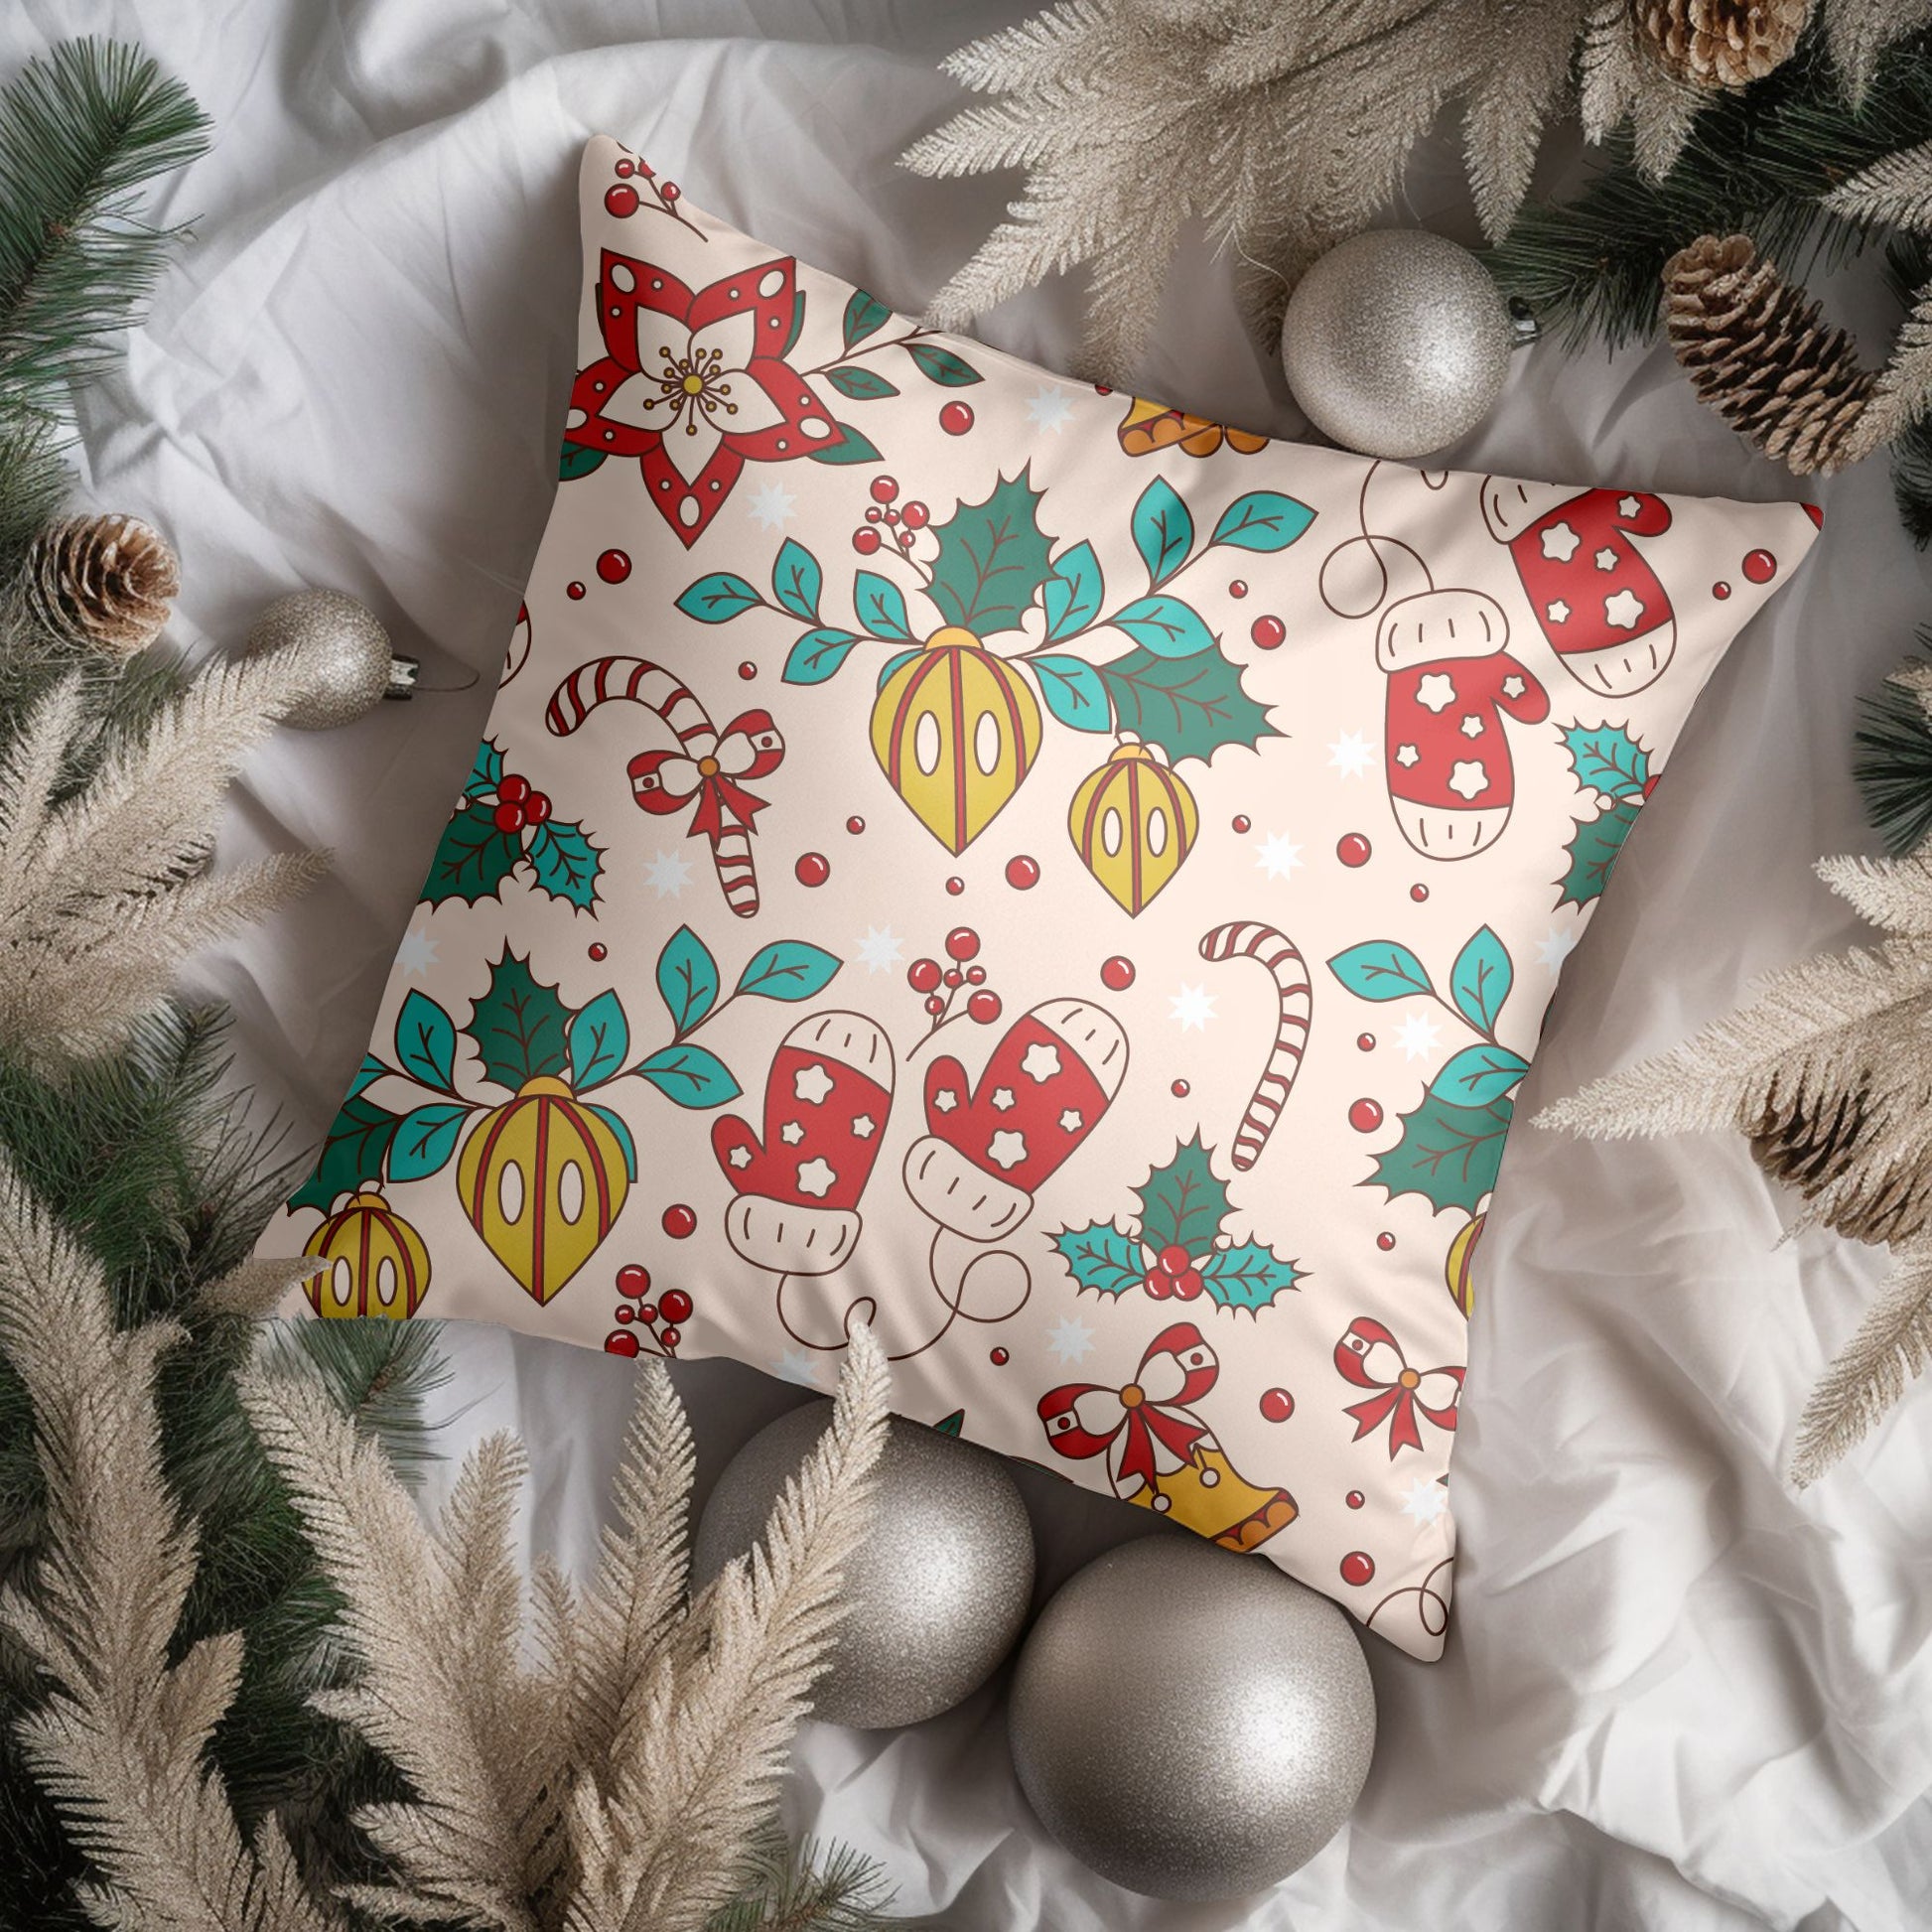 Christmas-Themed Decorative Pillow for Festive Home Decor